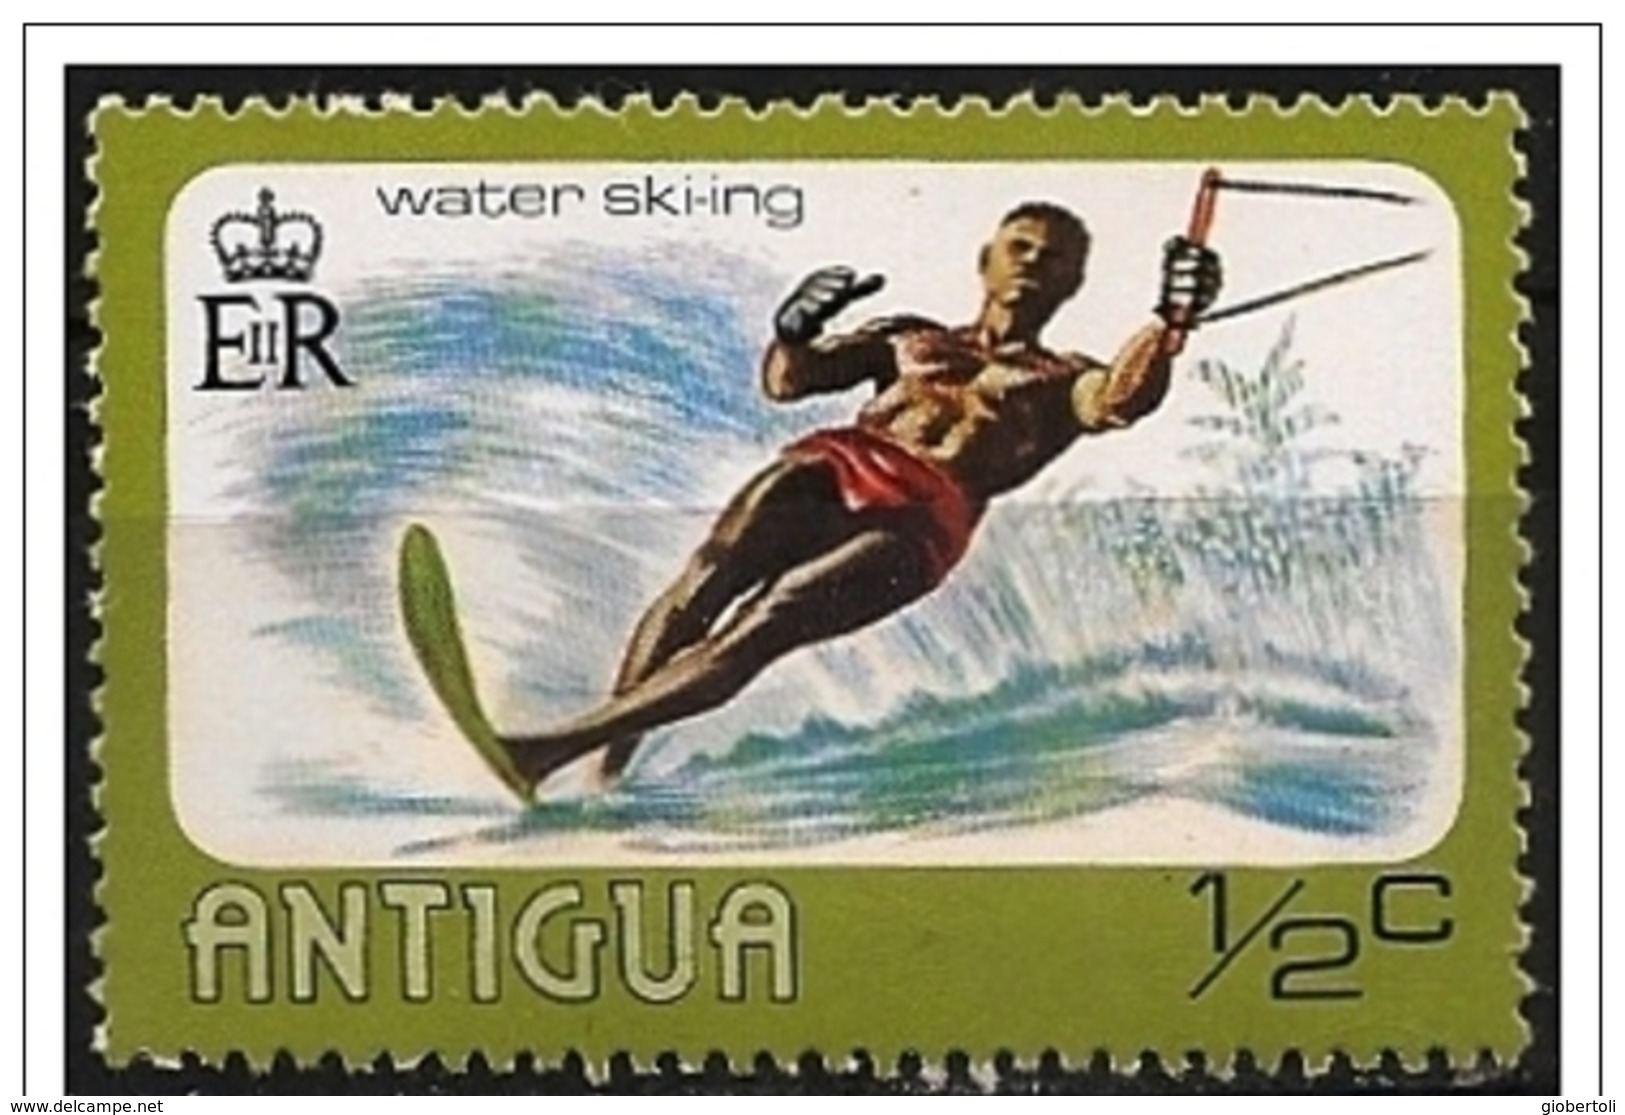 Antigua: Sci Nautico, Water Skiing, Ski Nautique - Ski Nautique